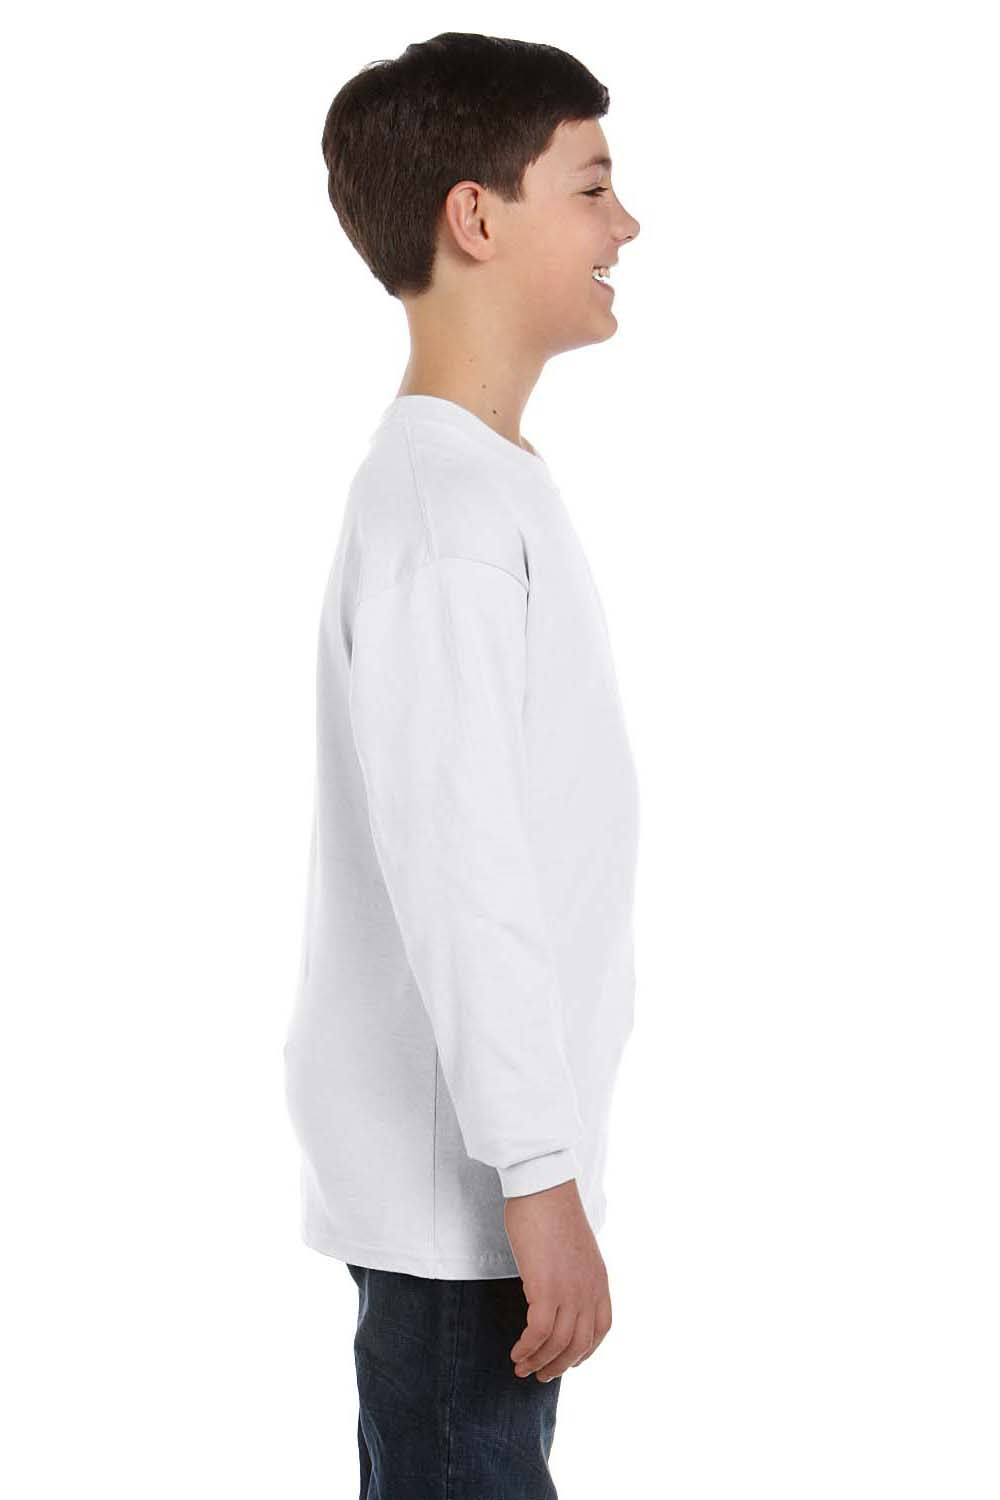 Hanes 5546 Youth ComfortSoft Long Sleeve Crewneck T-Shirt White Side